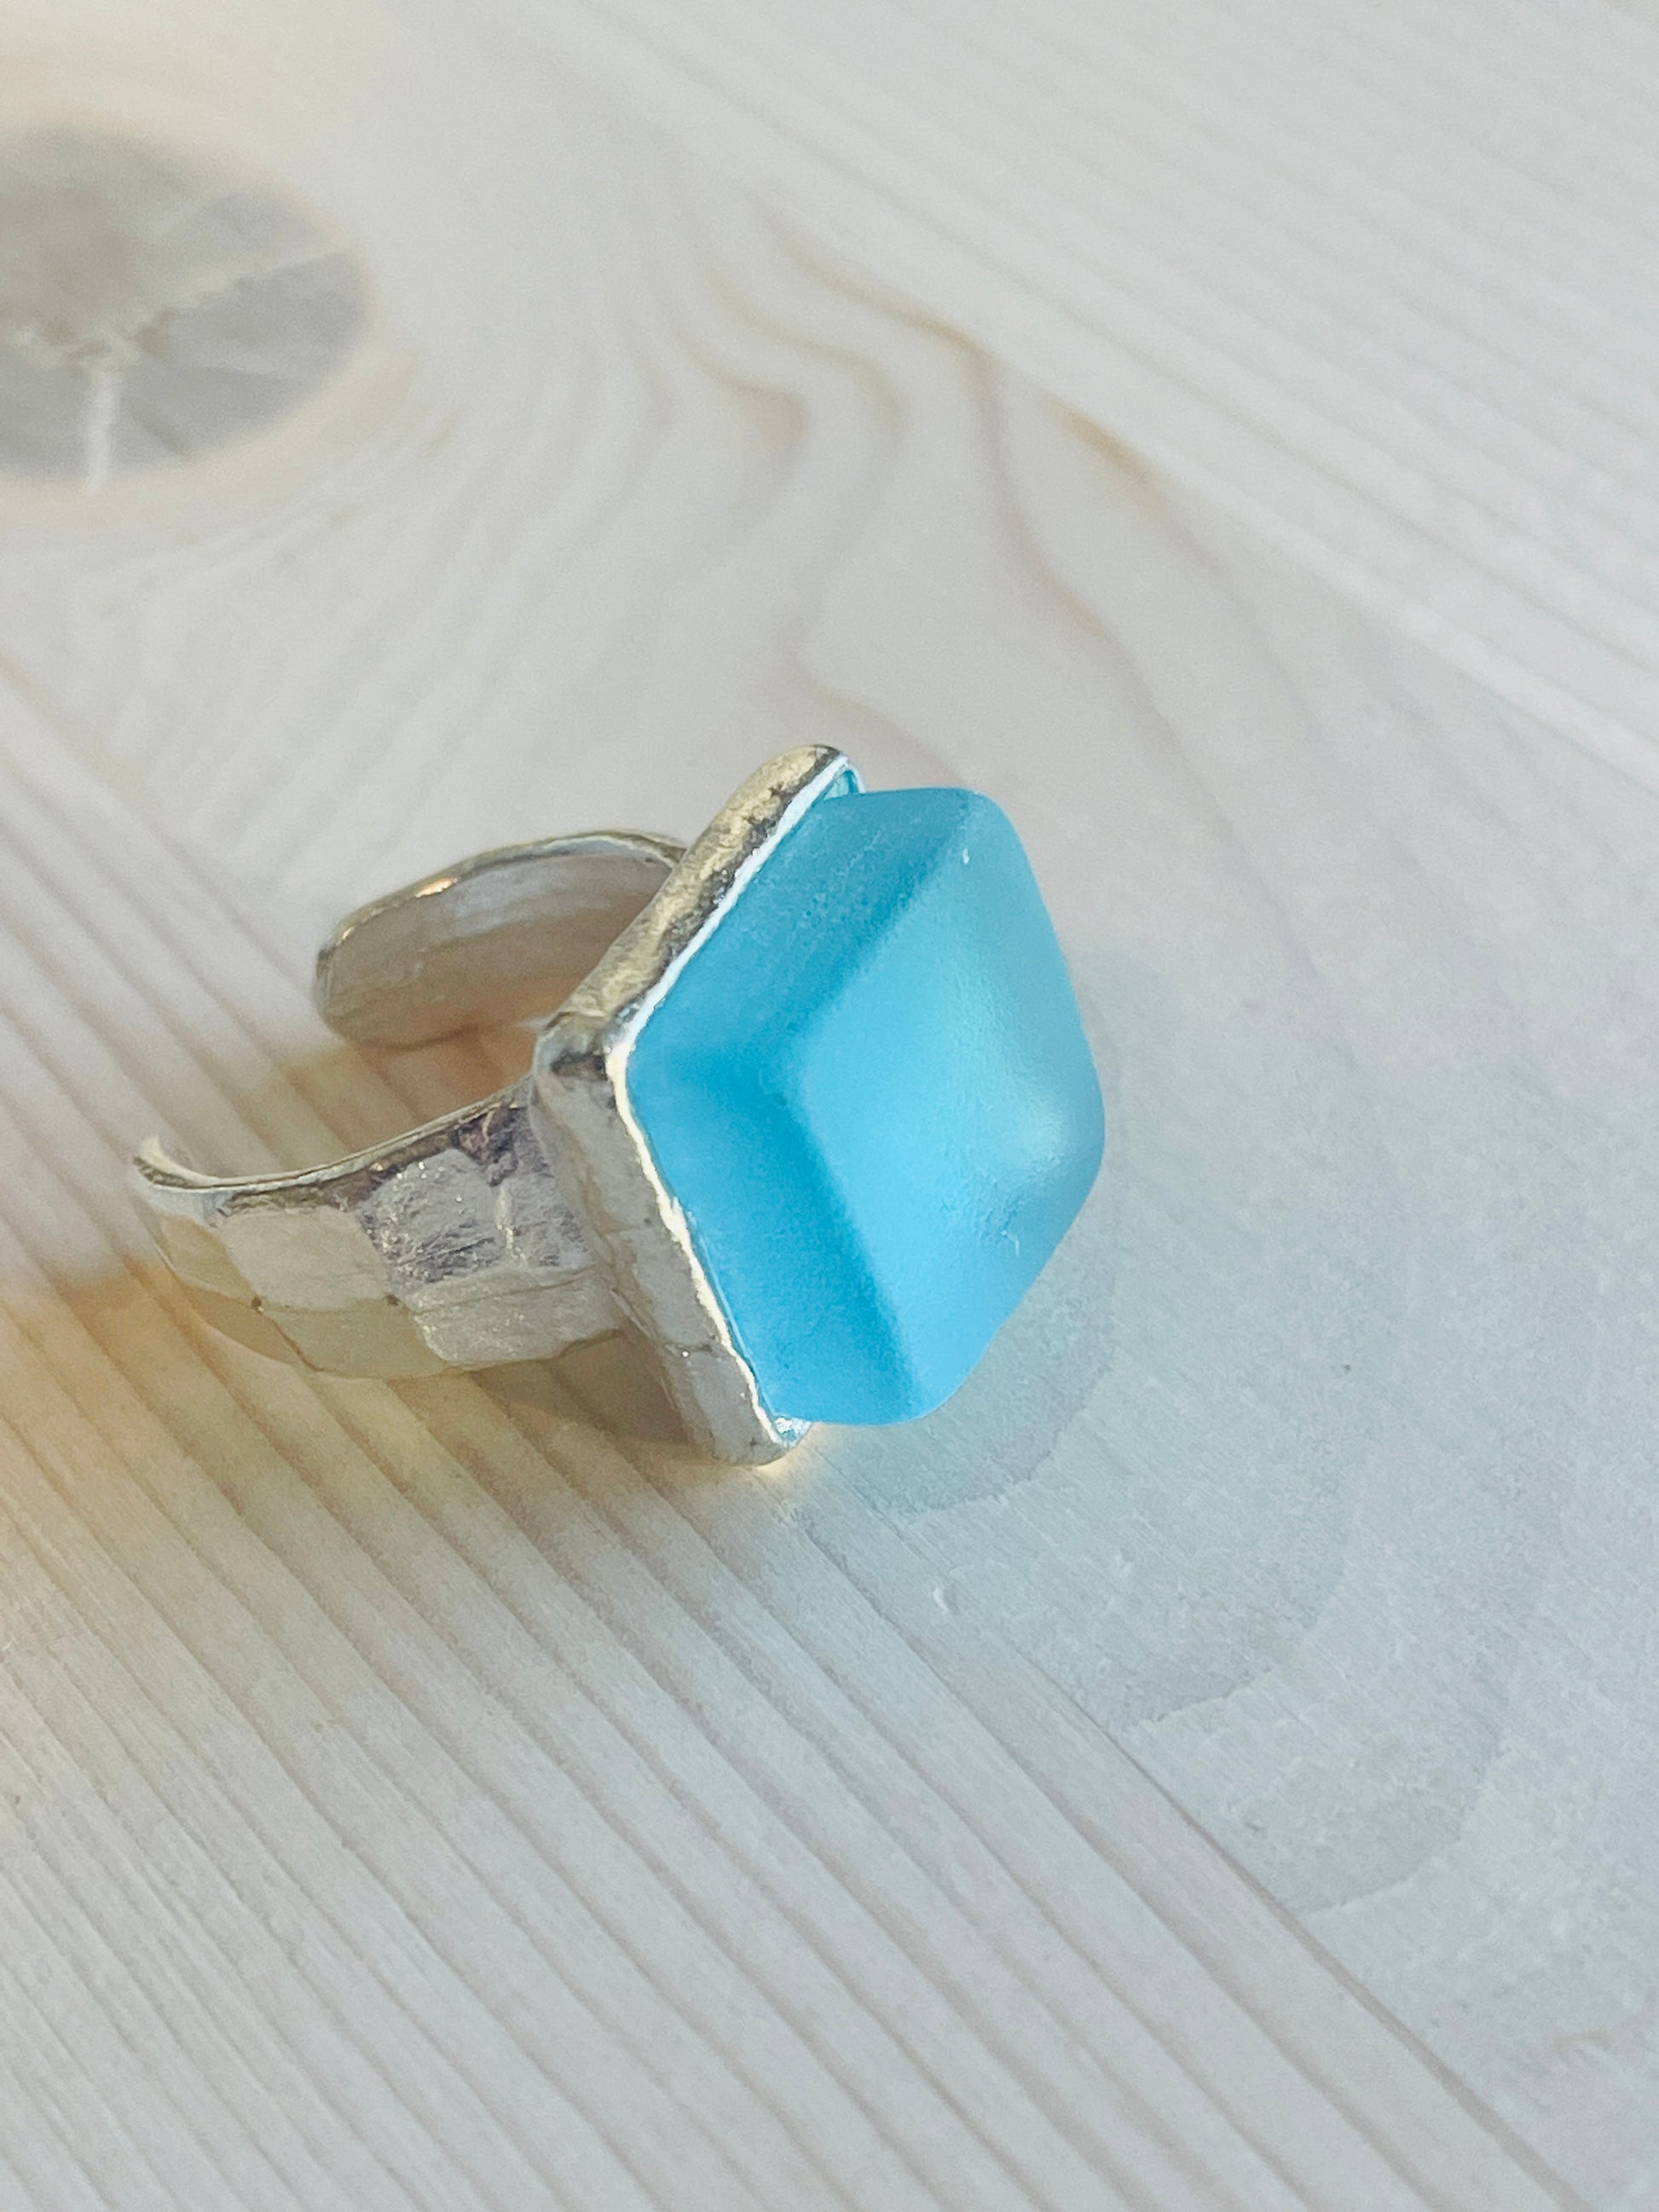 Silver Aqua Glass Ring Handmade in USA.